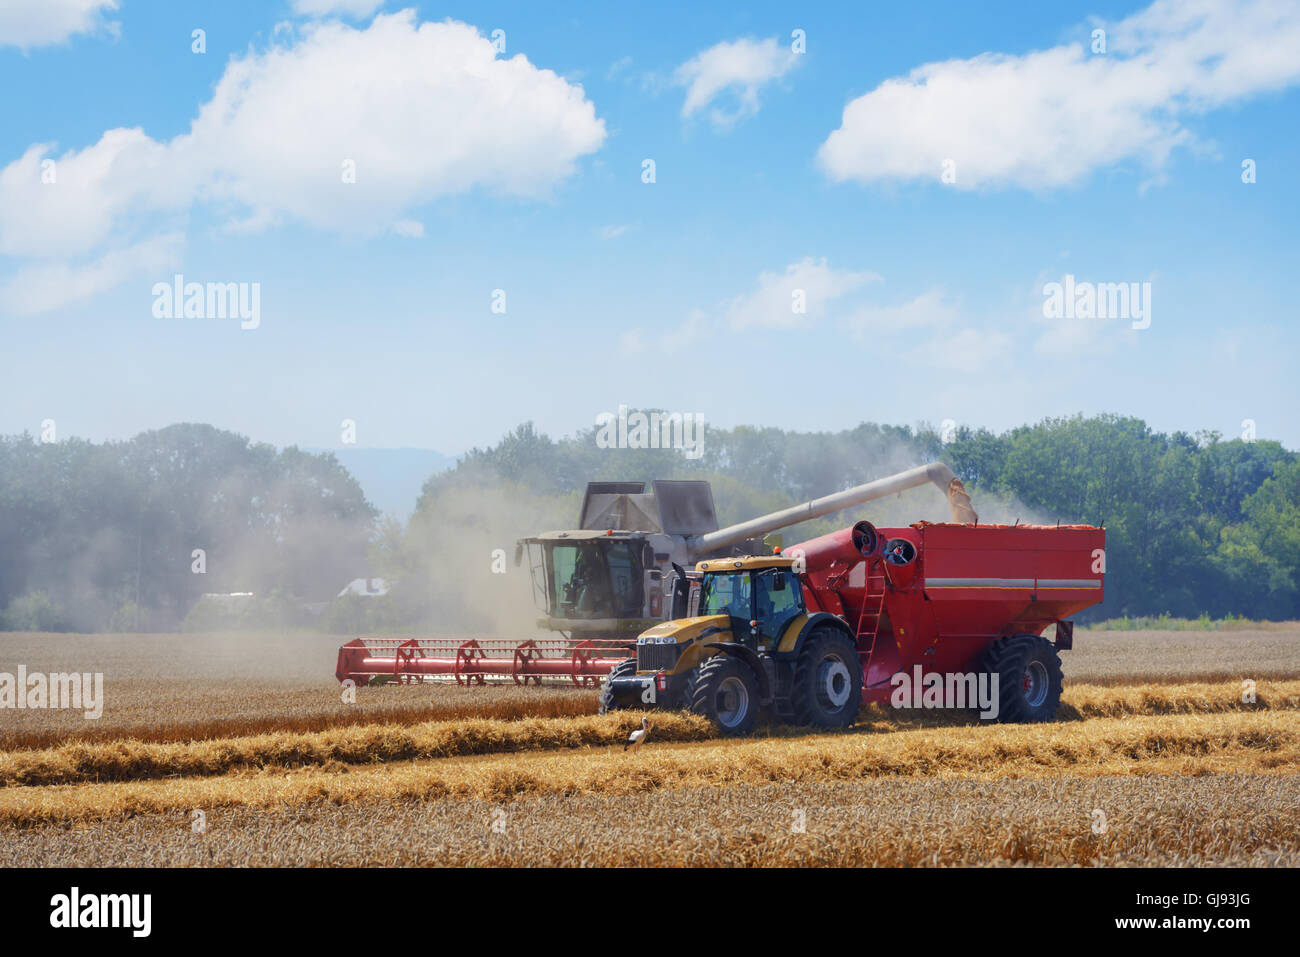 Amazing rural scene on autumn field with harvester Stock Photo